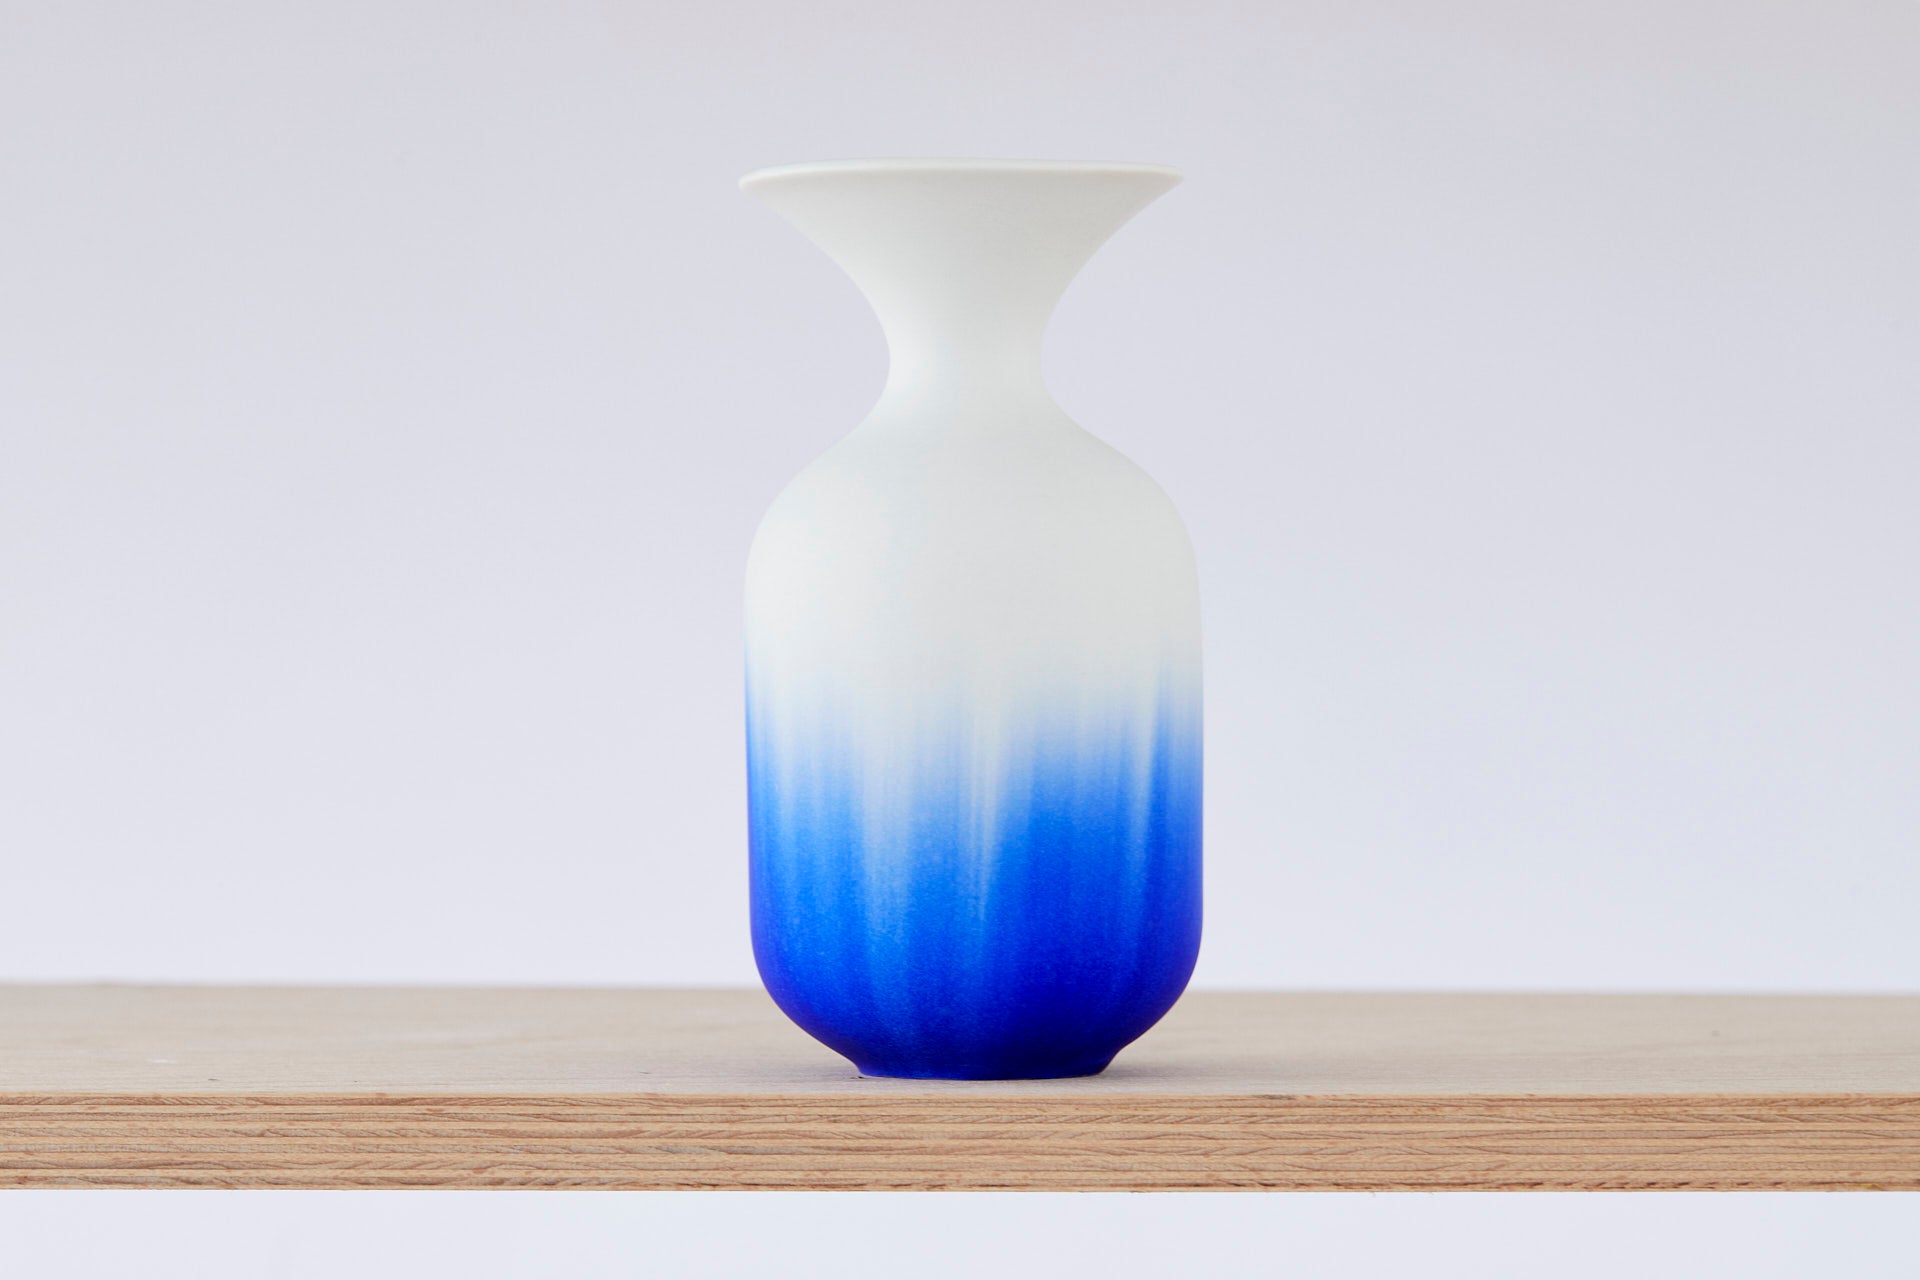 Vibrant blue trumpet vase